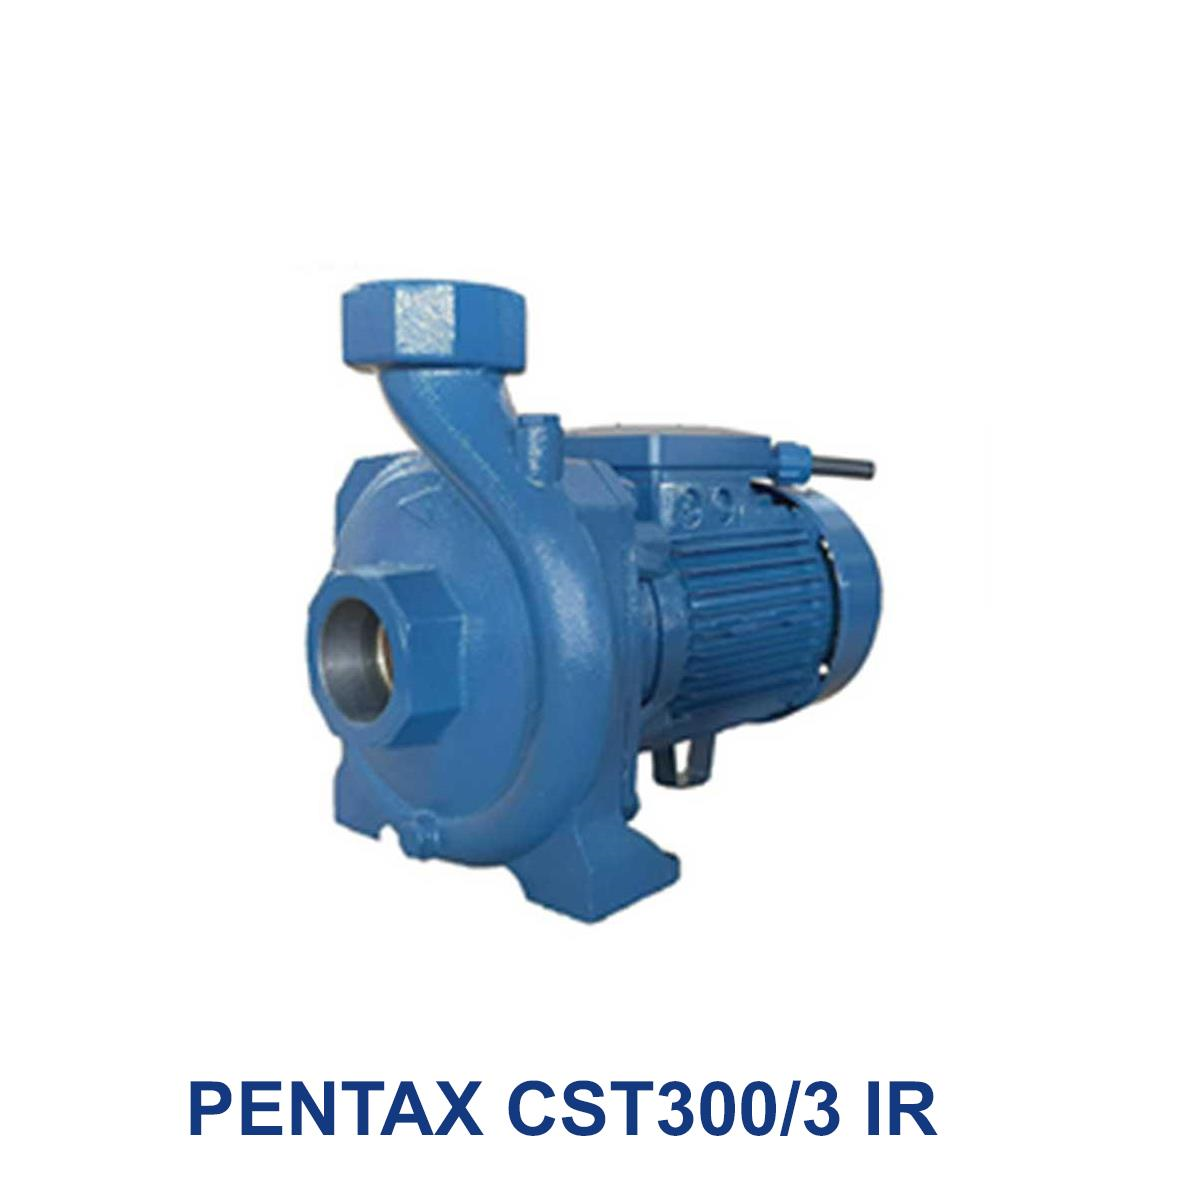 PENTAX-CST300-3-IR